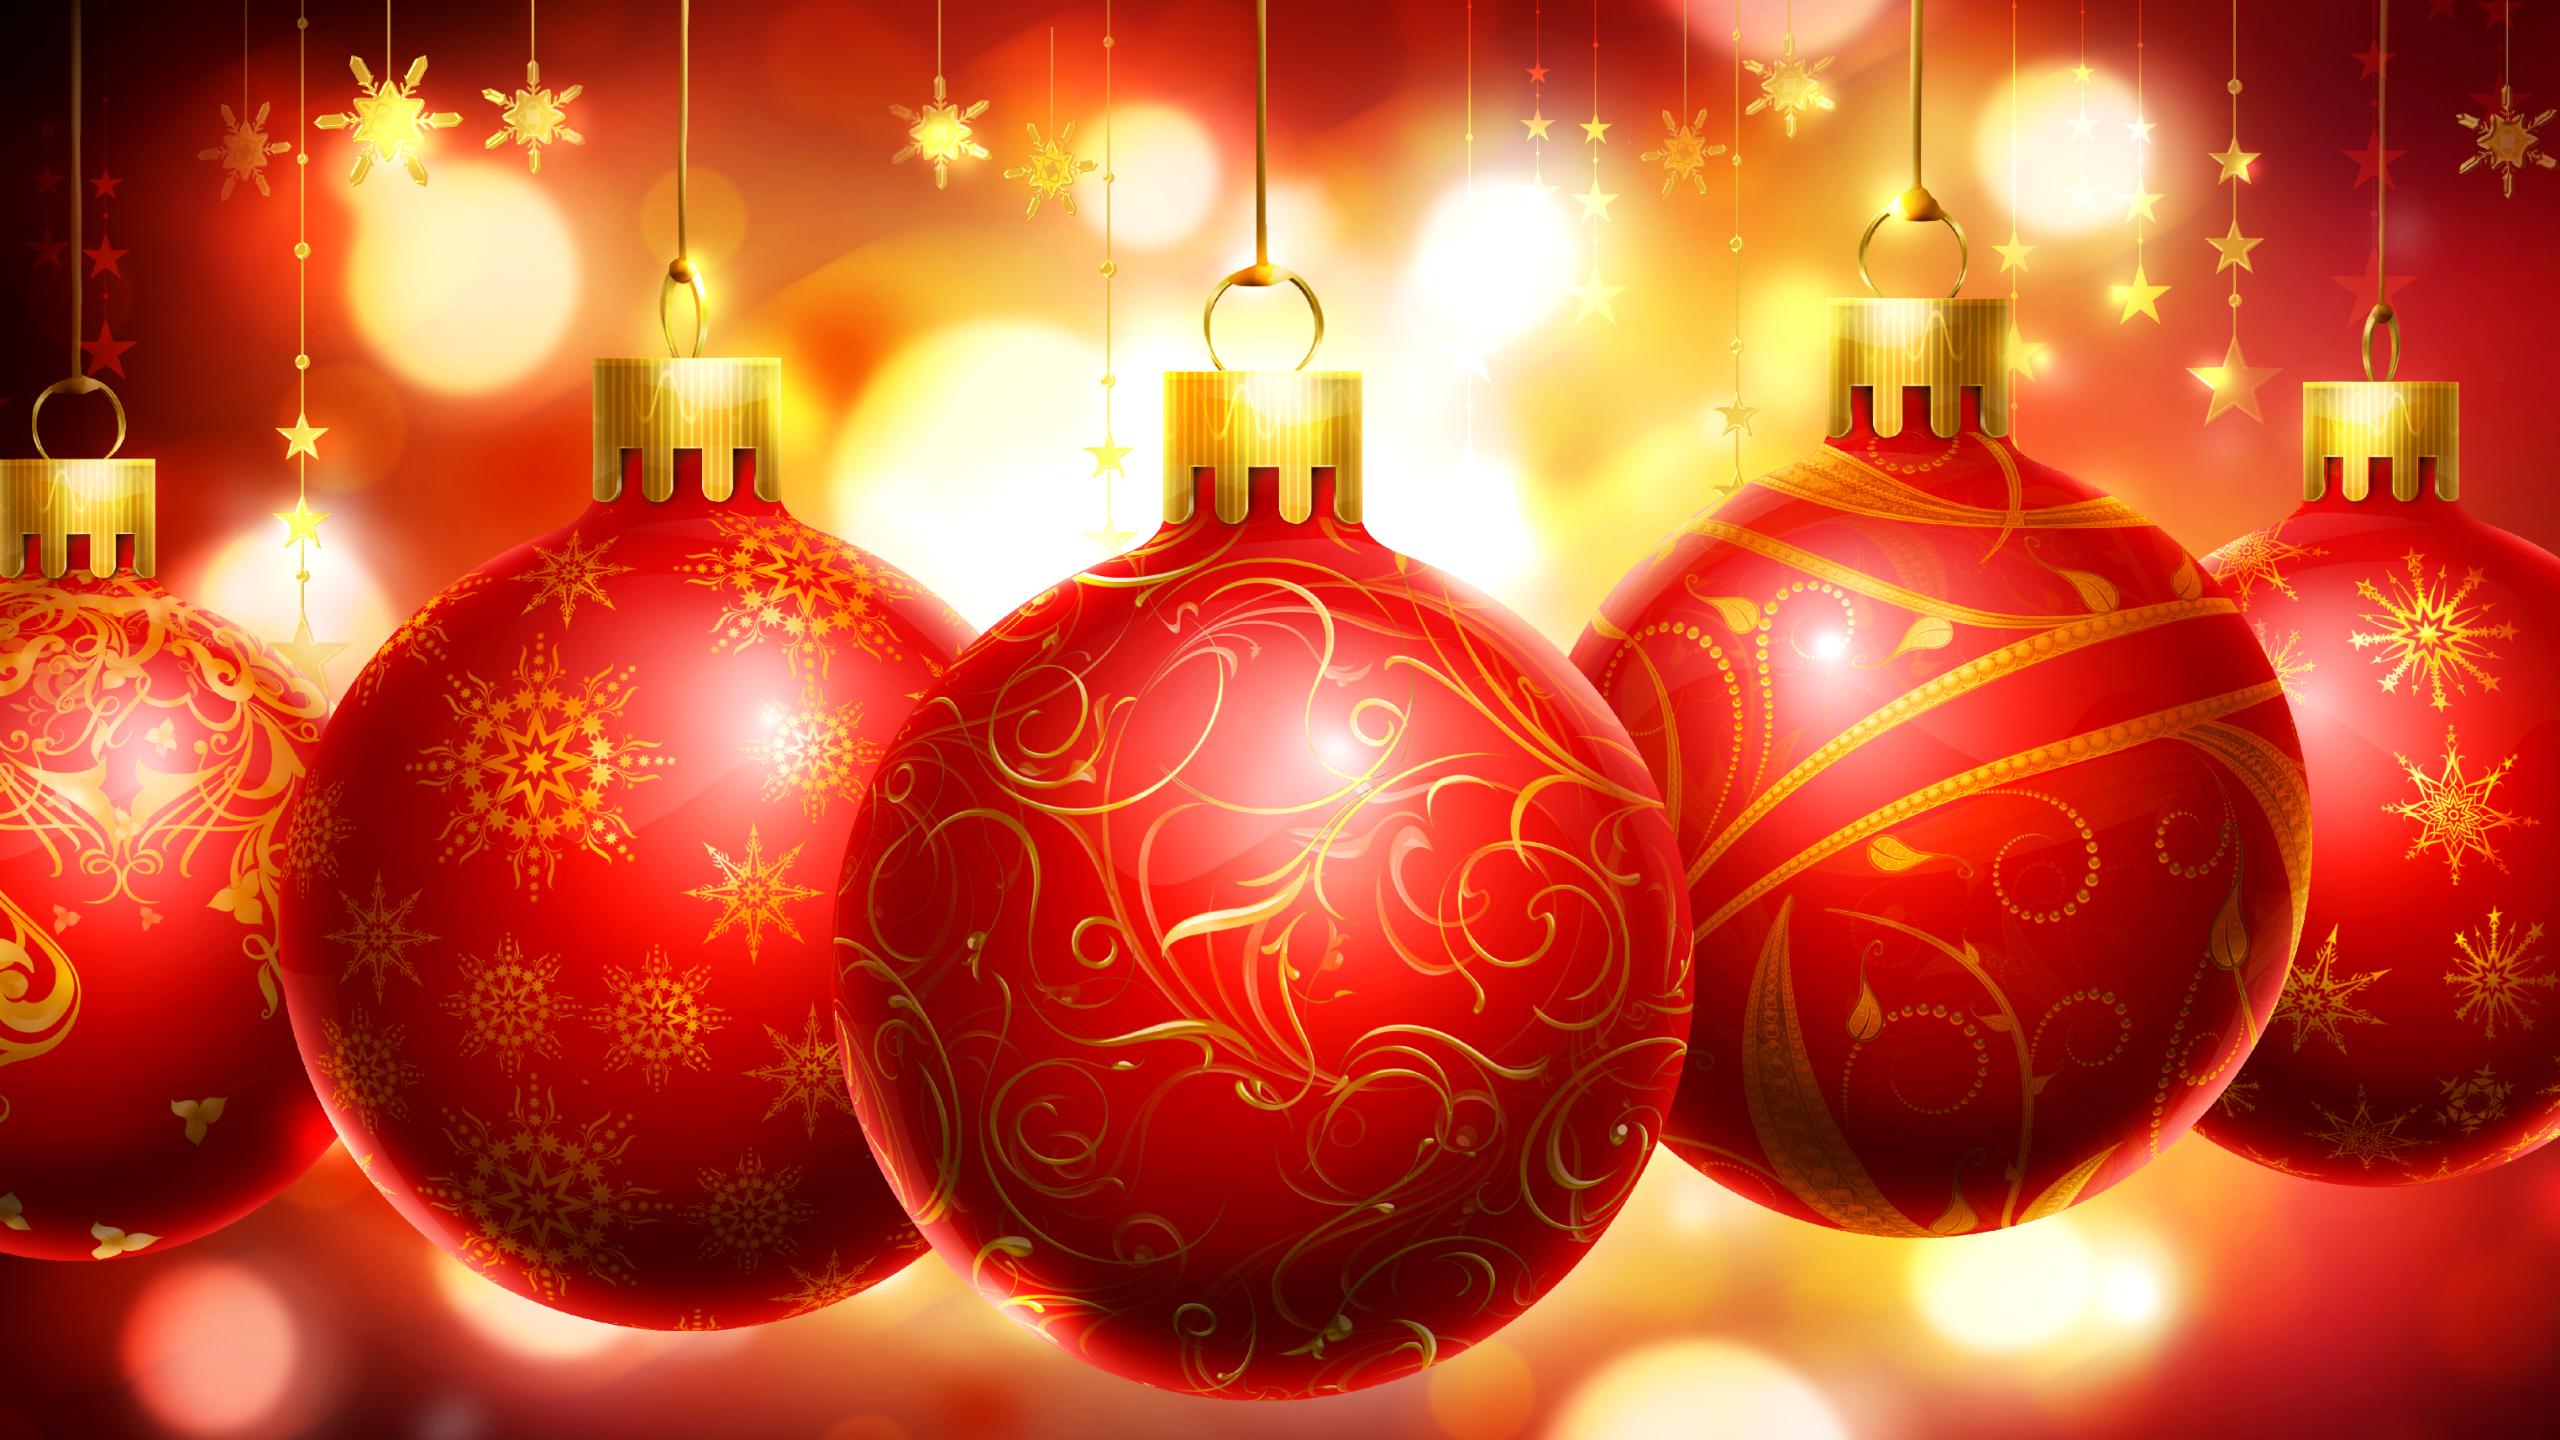 2560 x 1440 · jpeg - Merry Christmas Christmas Decorations Red Hd Wallpaper For Desktop ...